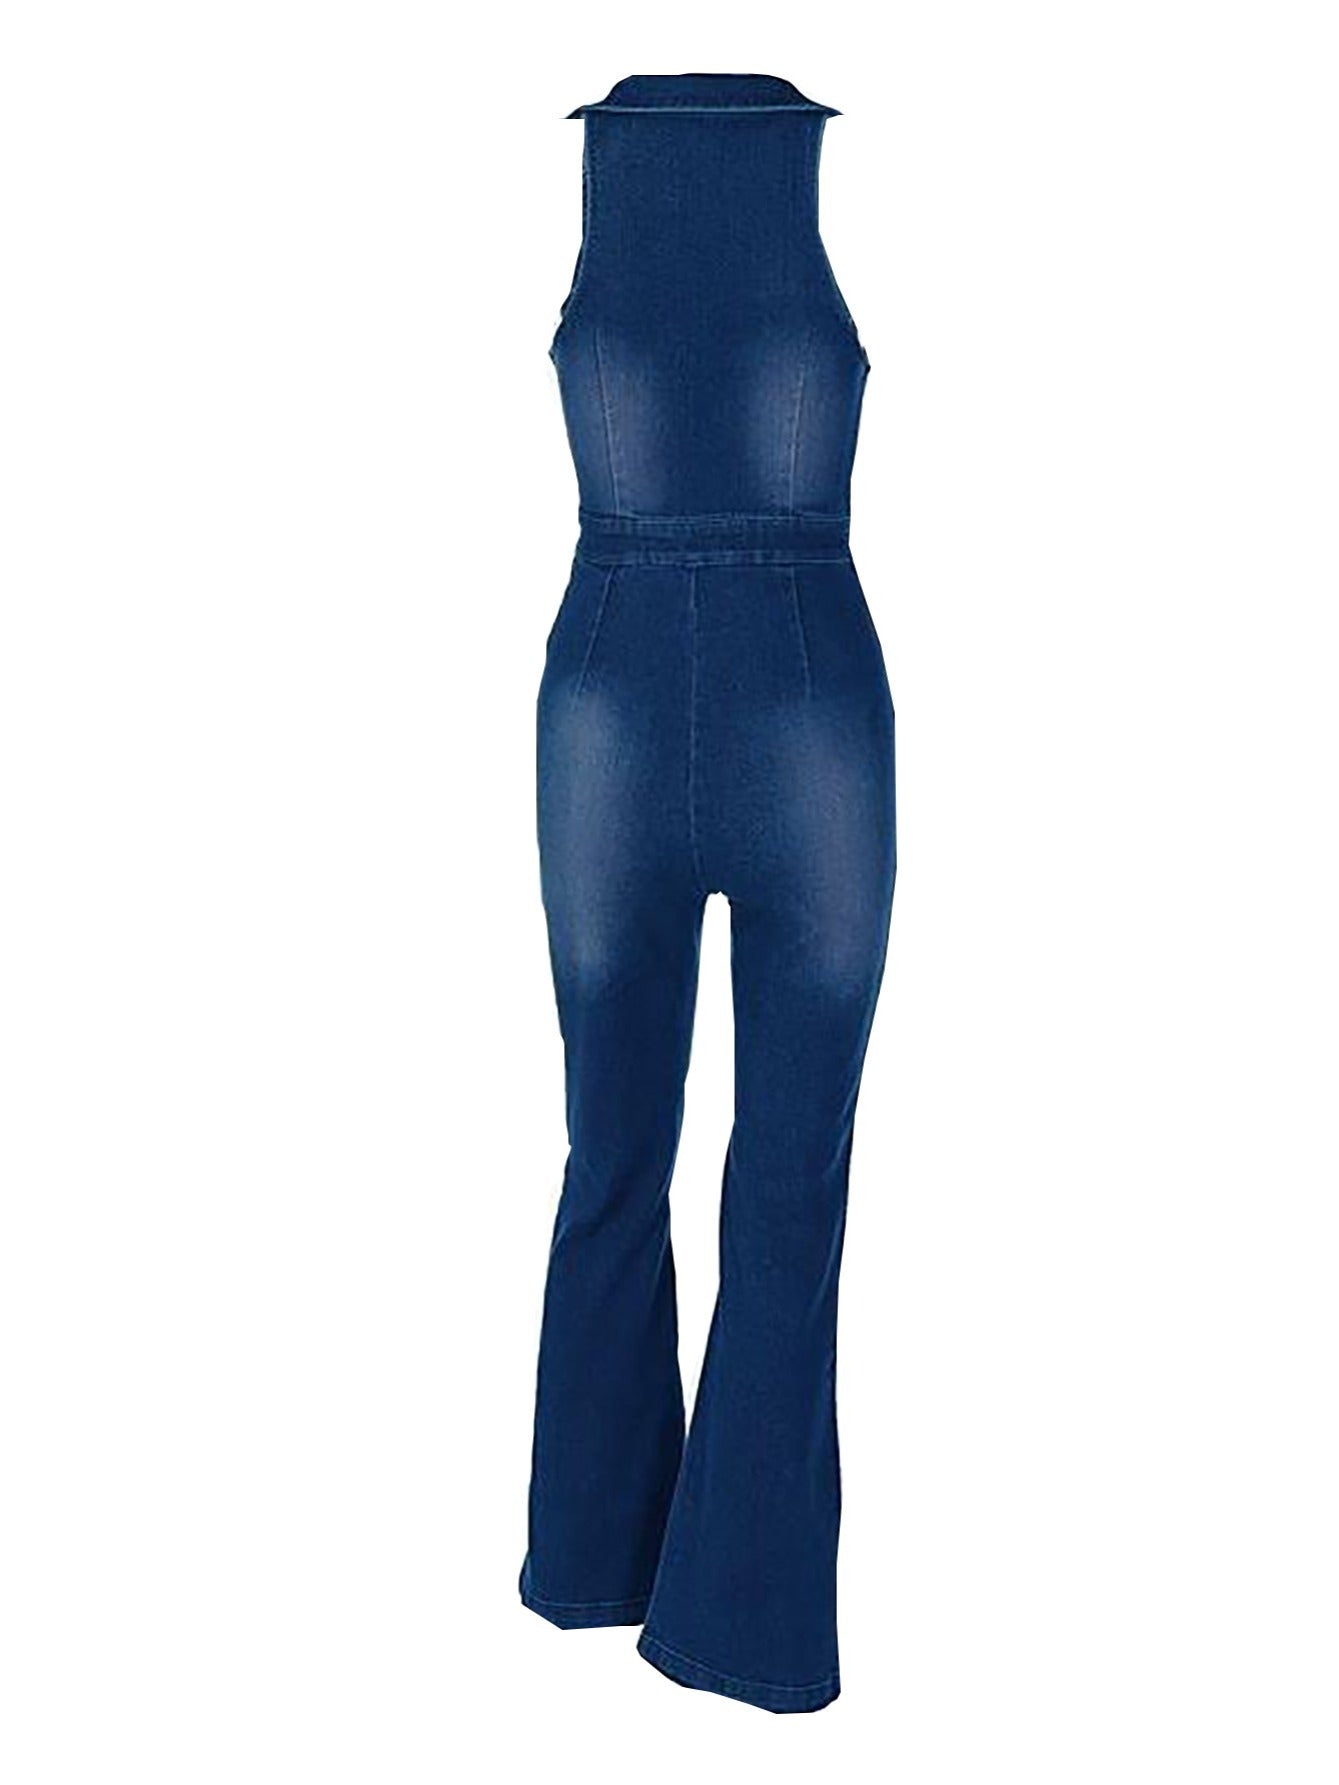 Lovevop-Blue Front Zipper Denim Jumsuit, Sleeveless V Neck Loose Fit Wide Leg Flare Jeans Denim Overalls, Women's Denim & Clothing